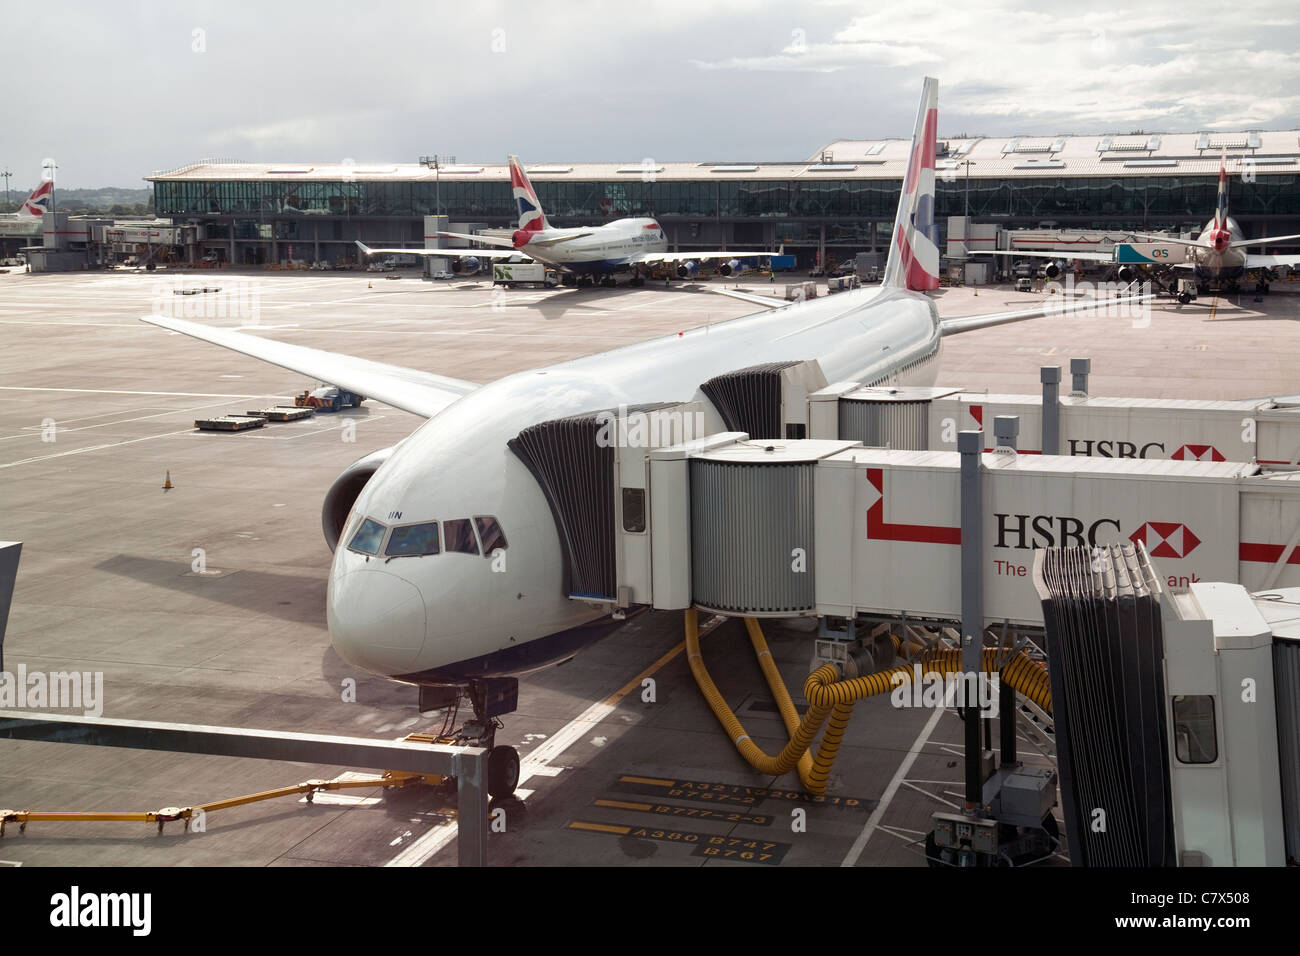 British Airways plane refuelling at Terminal 5, Heathrow airport London UK Stock Photo